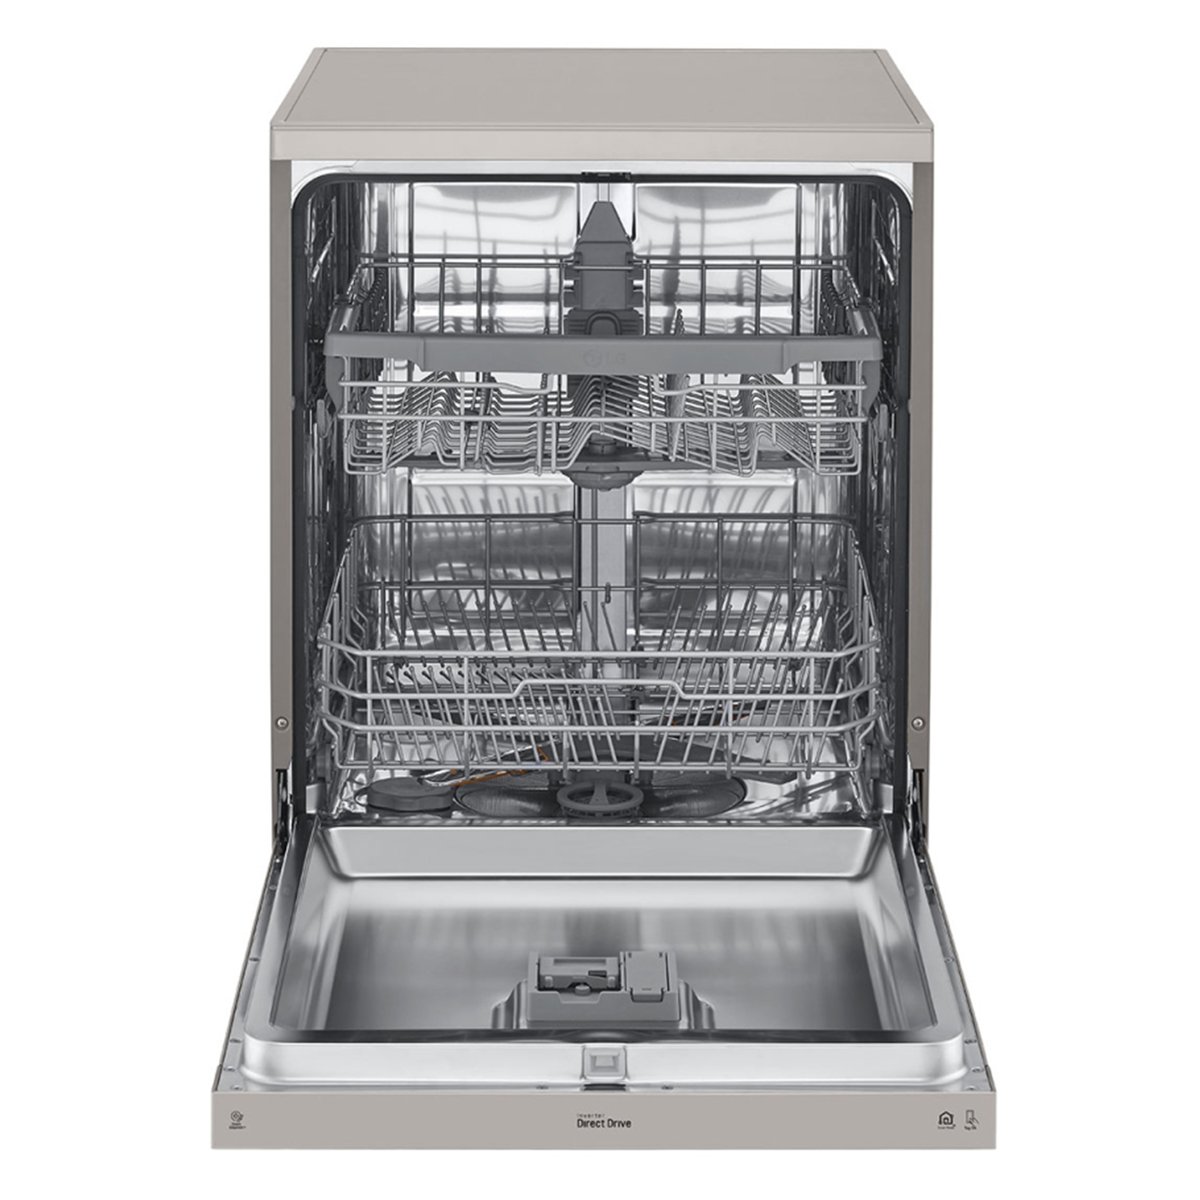 LG QuadWash Dishwasher DFB512FP 8Programs